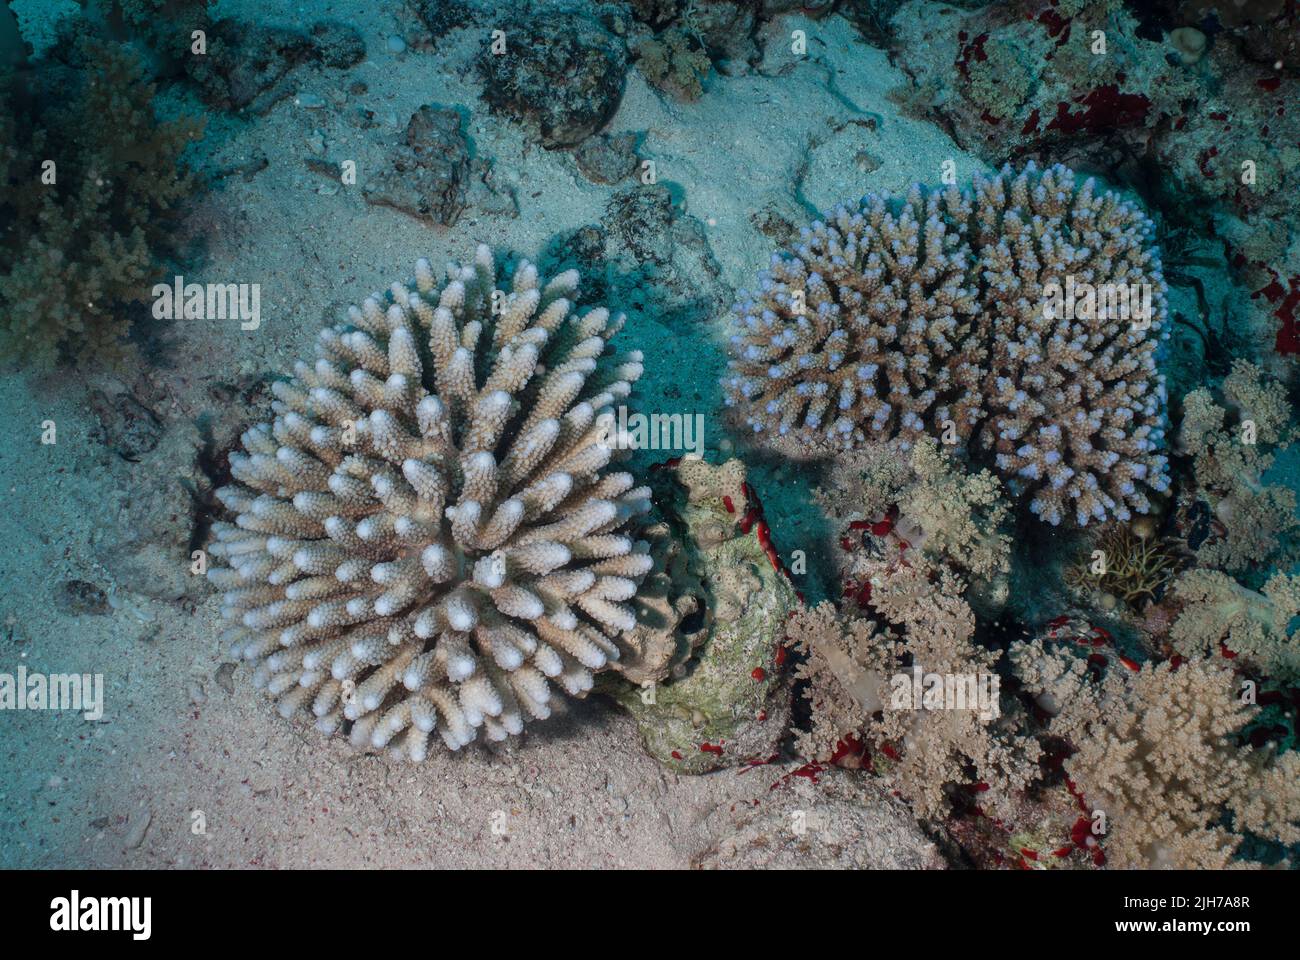 Stony corals, Acropora humilis (left) and Acropora hemprichii (right), Acroporidae,  Sharm el Sheikh Red Sea, Egypt Stock Photo